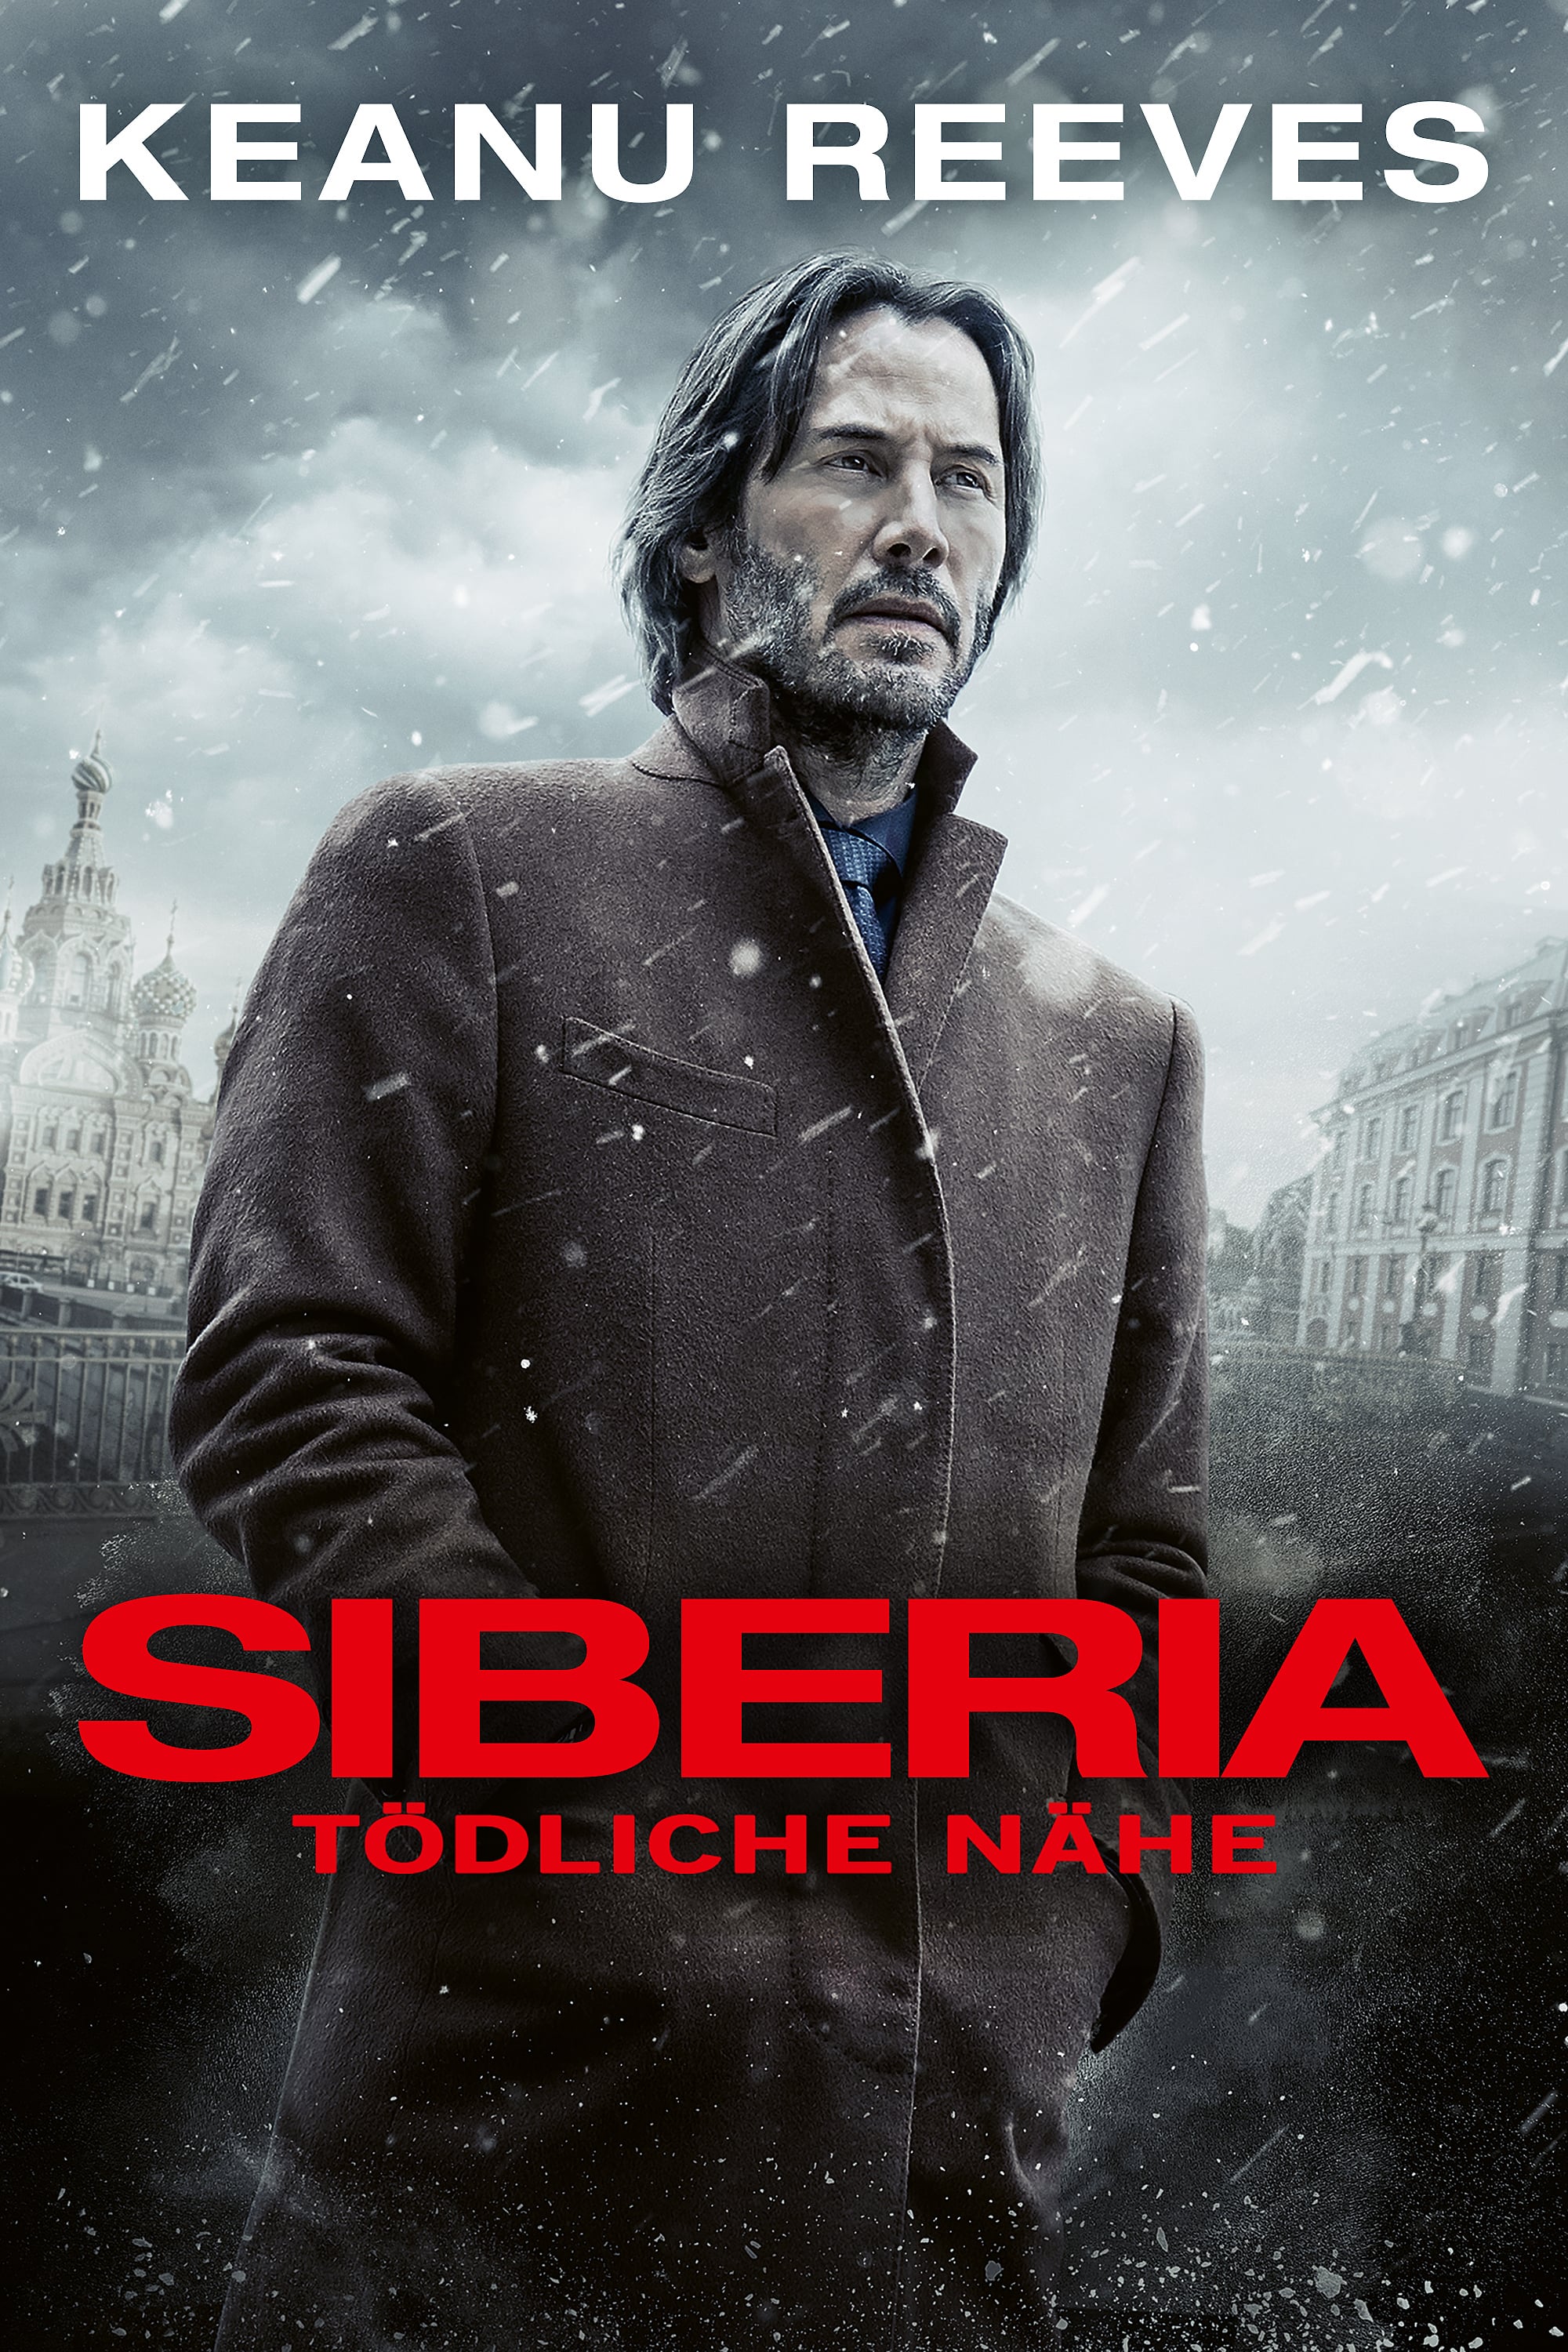 Plakat von "Siberia - Tödliche Nähe"